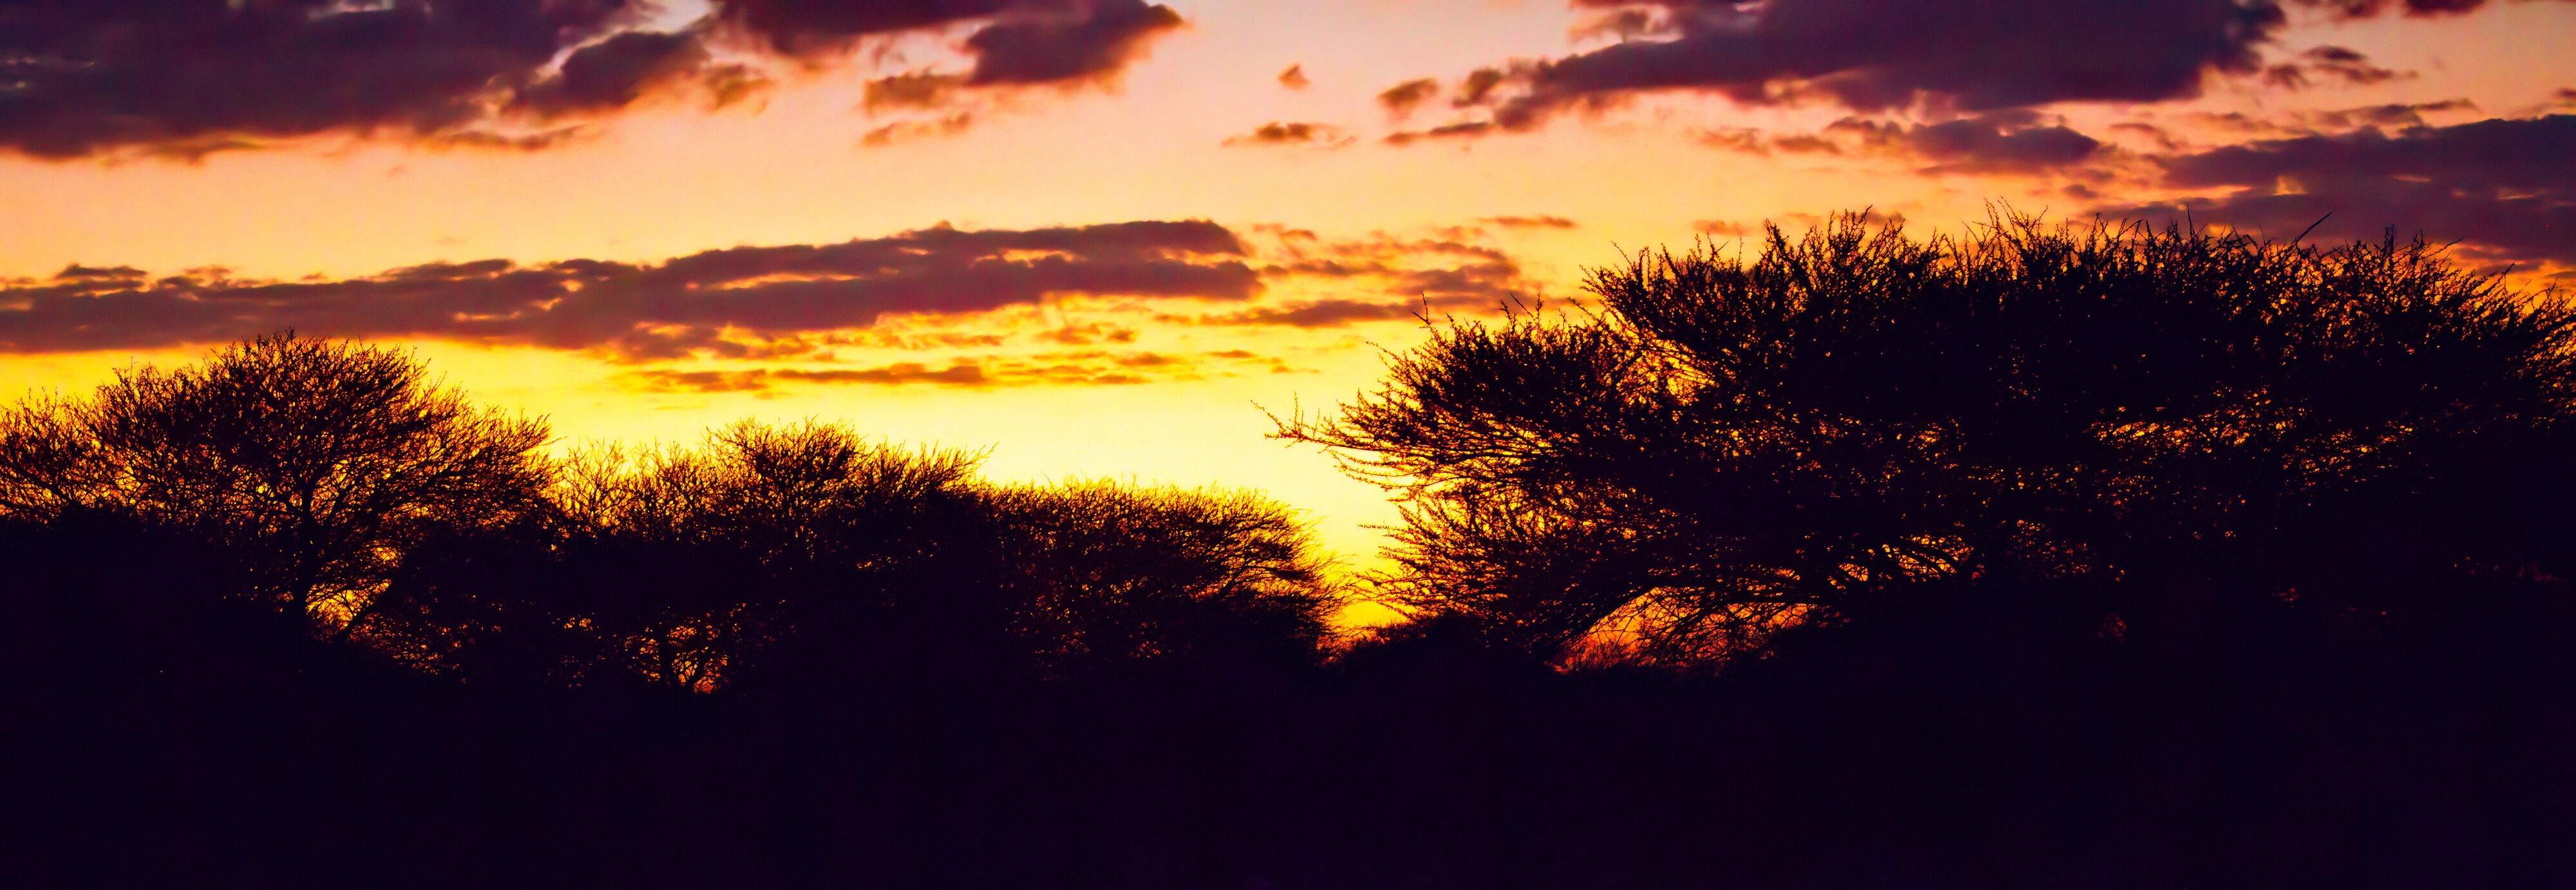 African sunset-2.jpg